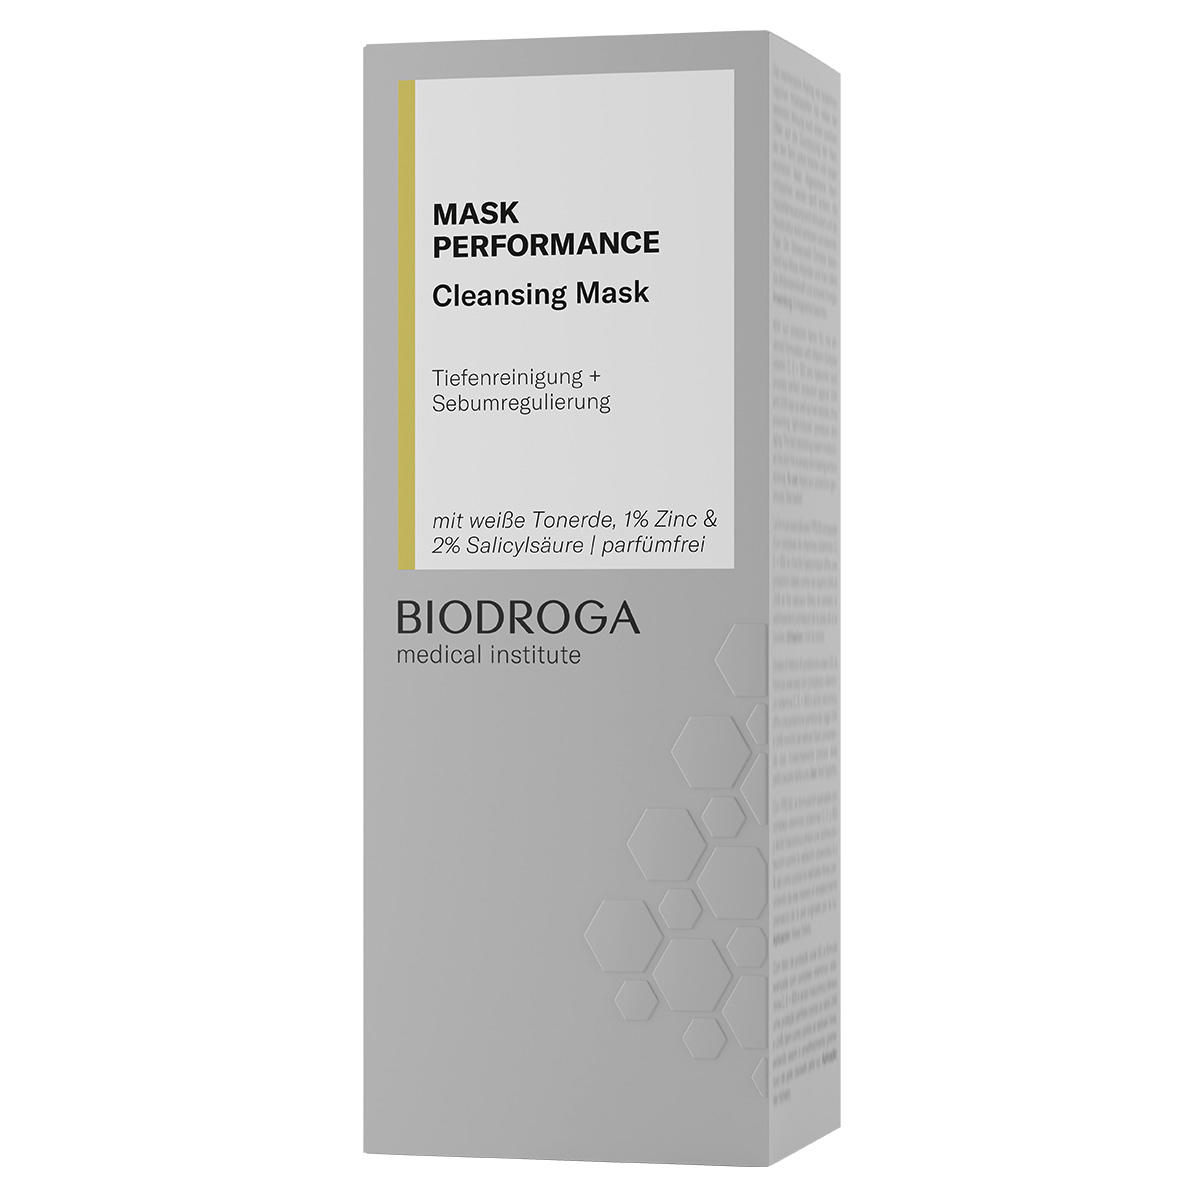 BIODROGA Medical Institute MASK PERFORMANCE Cleansing Masque 50 ml - 2